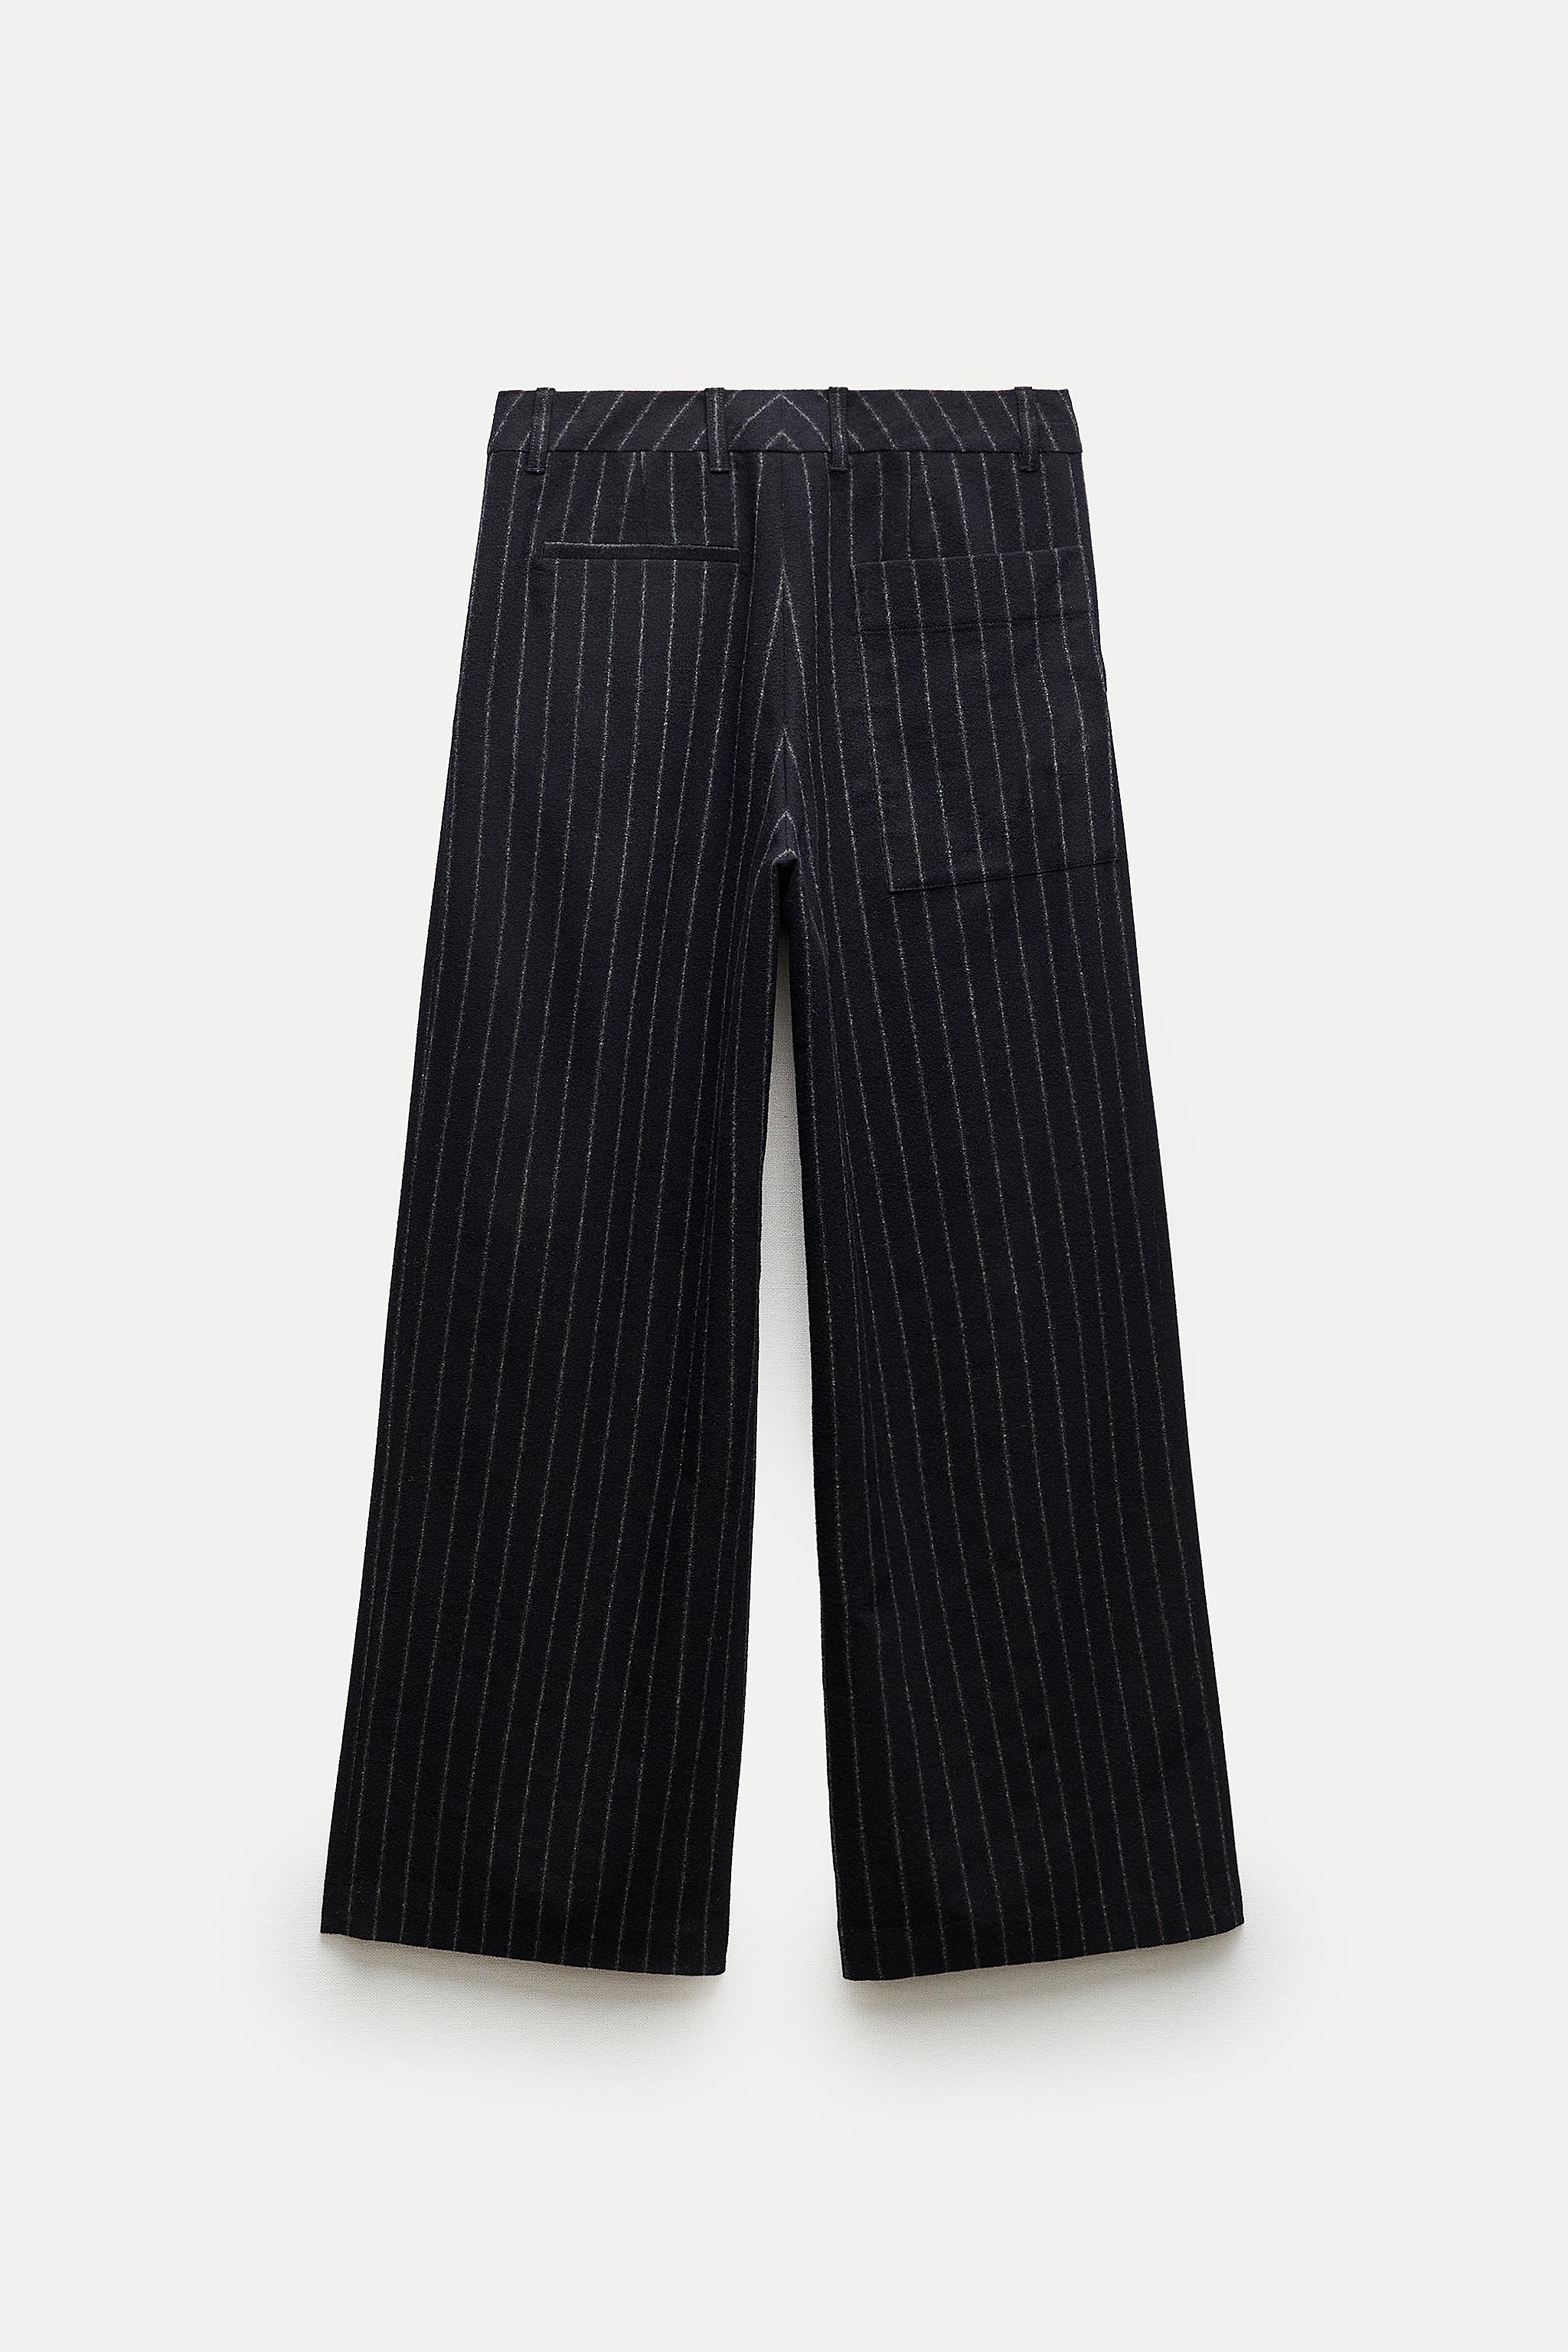 Zara Navy Grommet Lace Up Cropped Pants XS. high - Depop